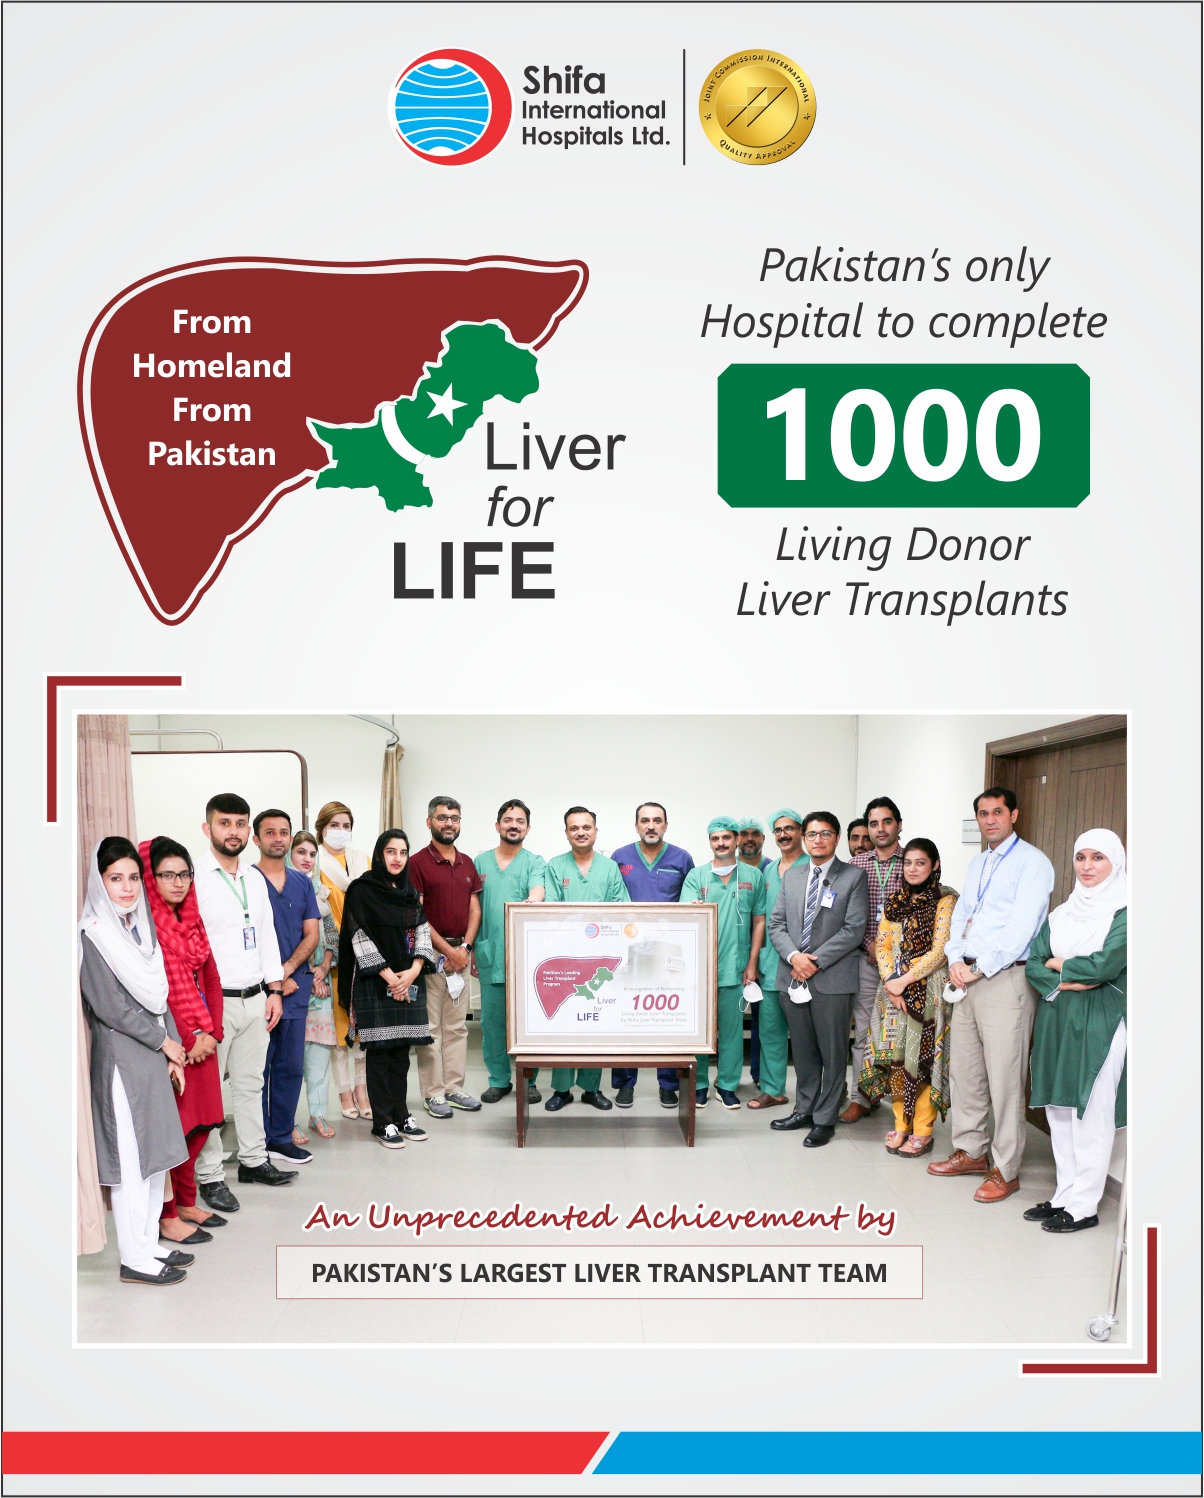 Shifa international hospitals complete 1000 liver transplants in Pakistan